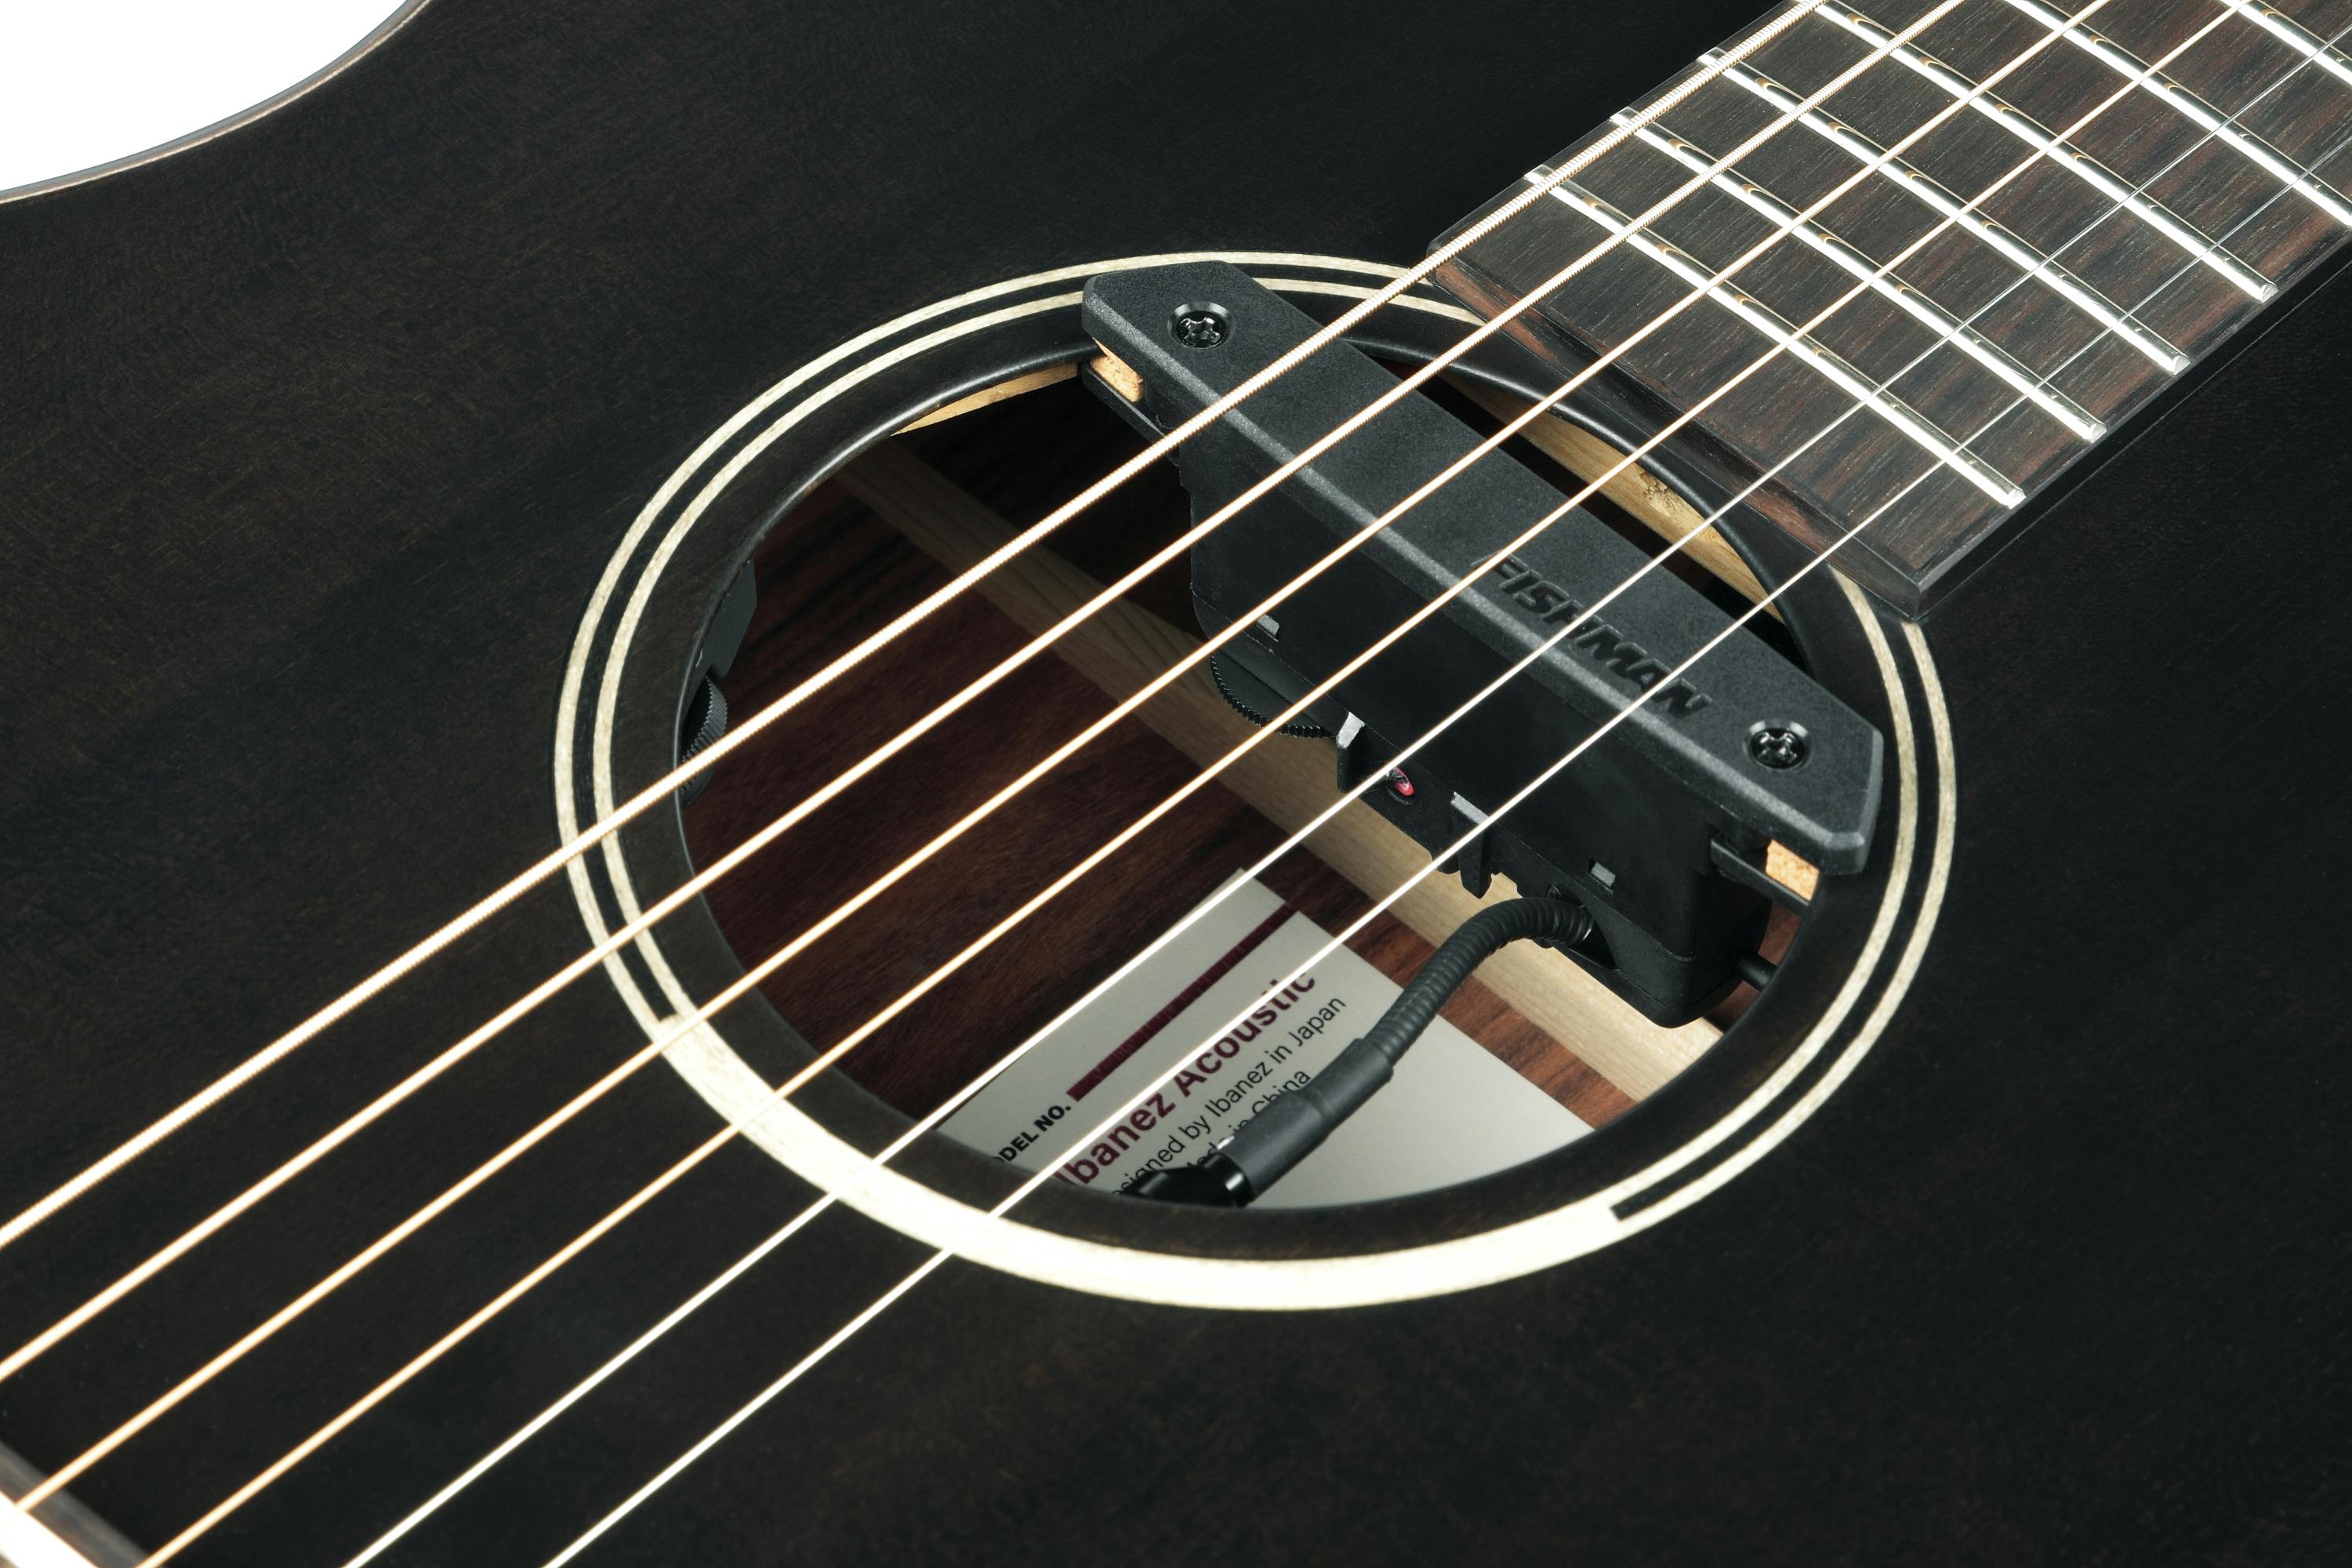 Ibanez Jon Gomm Signature JGM5 Acoustic Black Satin - Willcutt Guitars